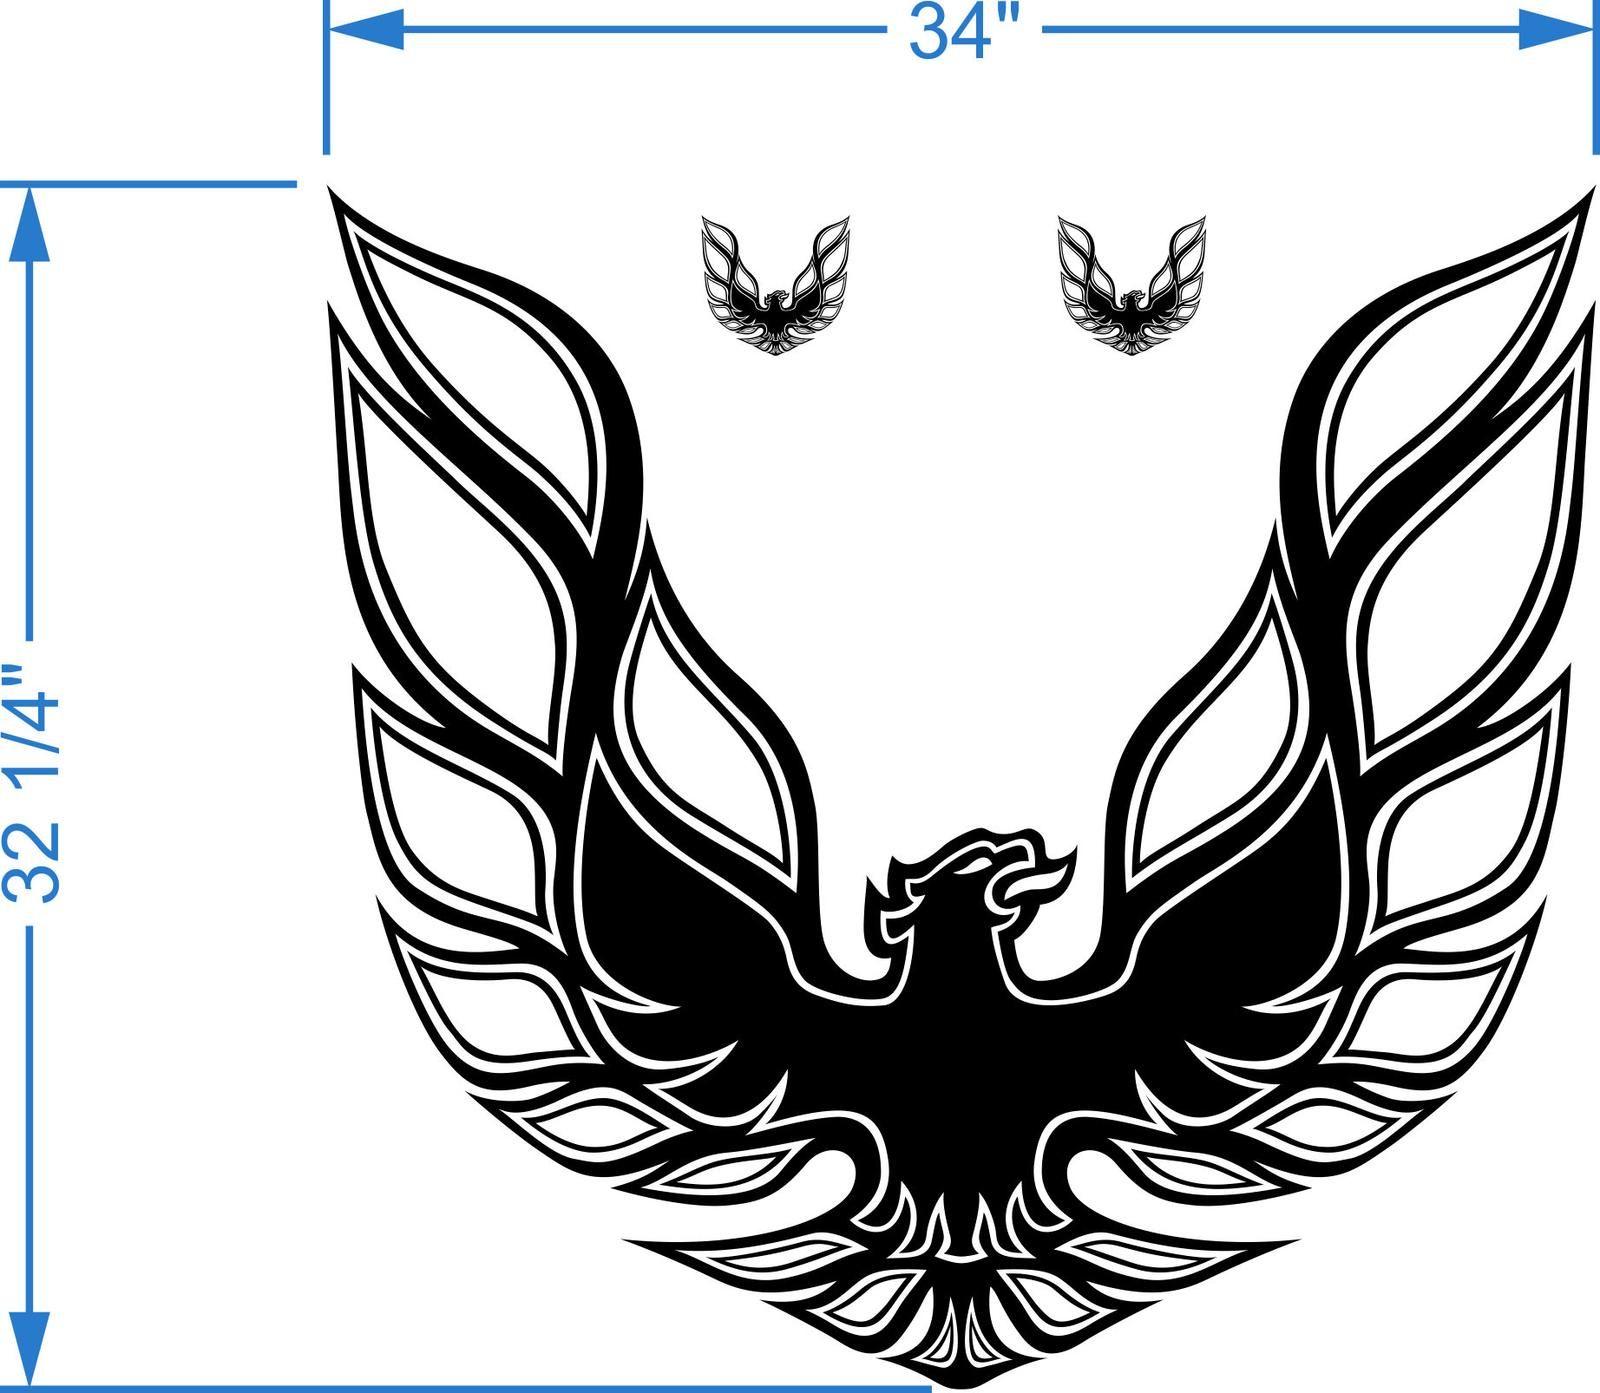 Trans AM Bird Logo - Product: Kit Firebird Trans Am Hood Bird Decal Graphic Pontiac